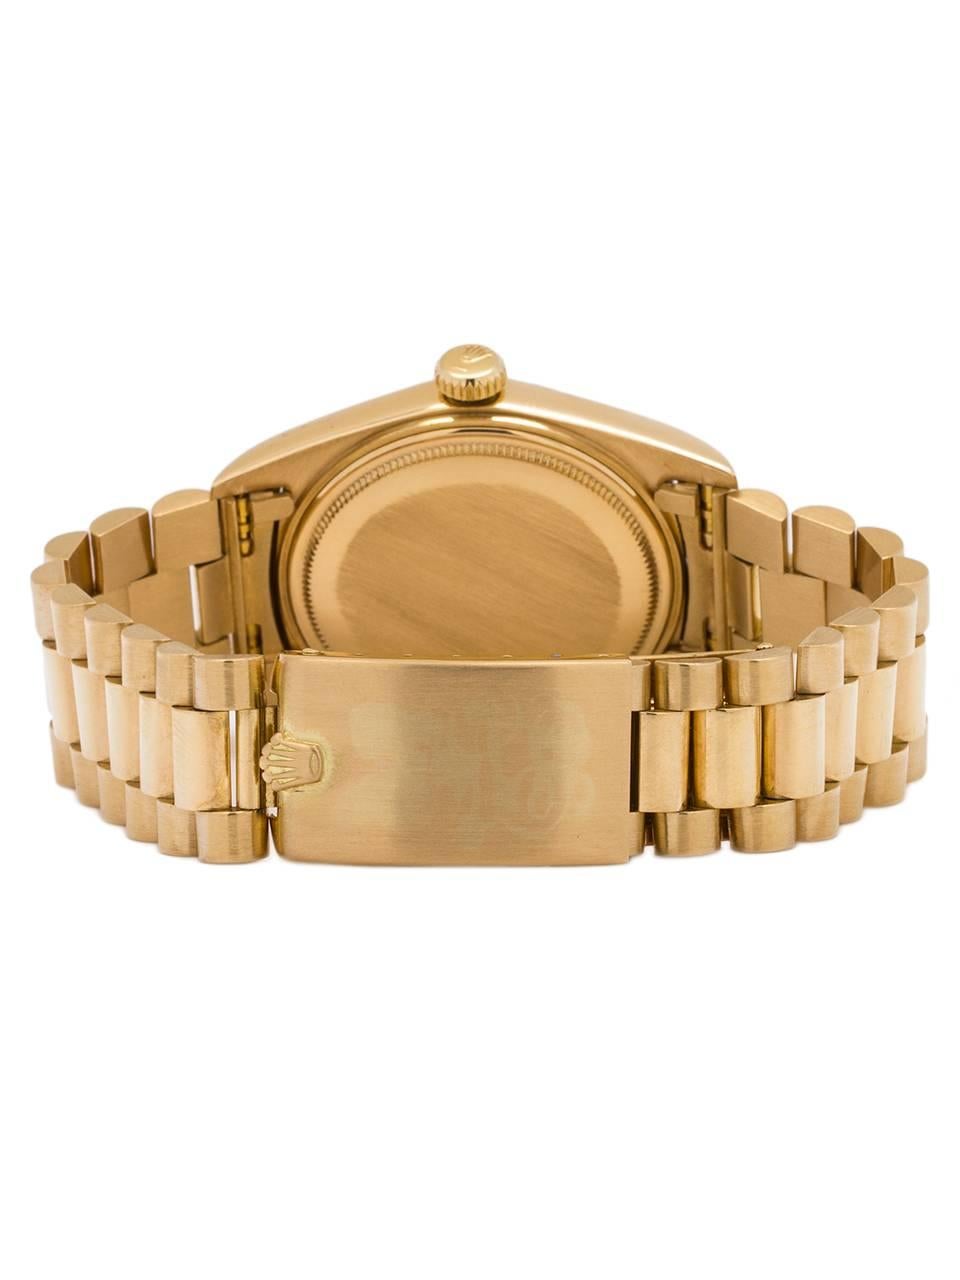 Men's Rolex Yellow Gold Datejust Presidential Bracelet Wristwatch Ref 1601, circa 1972